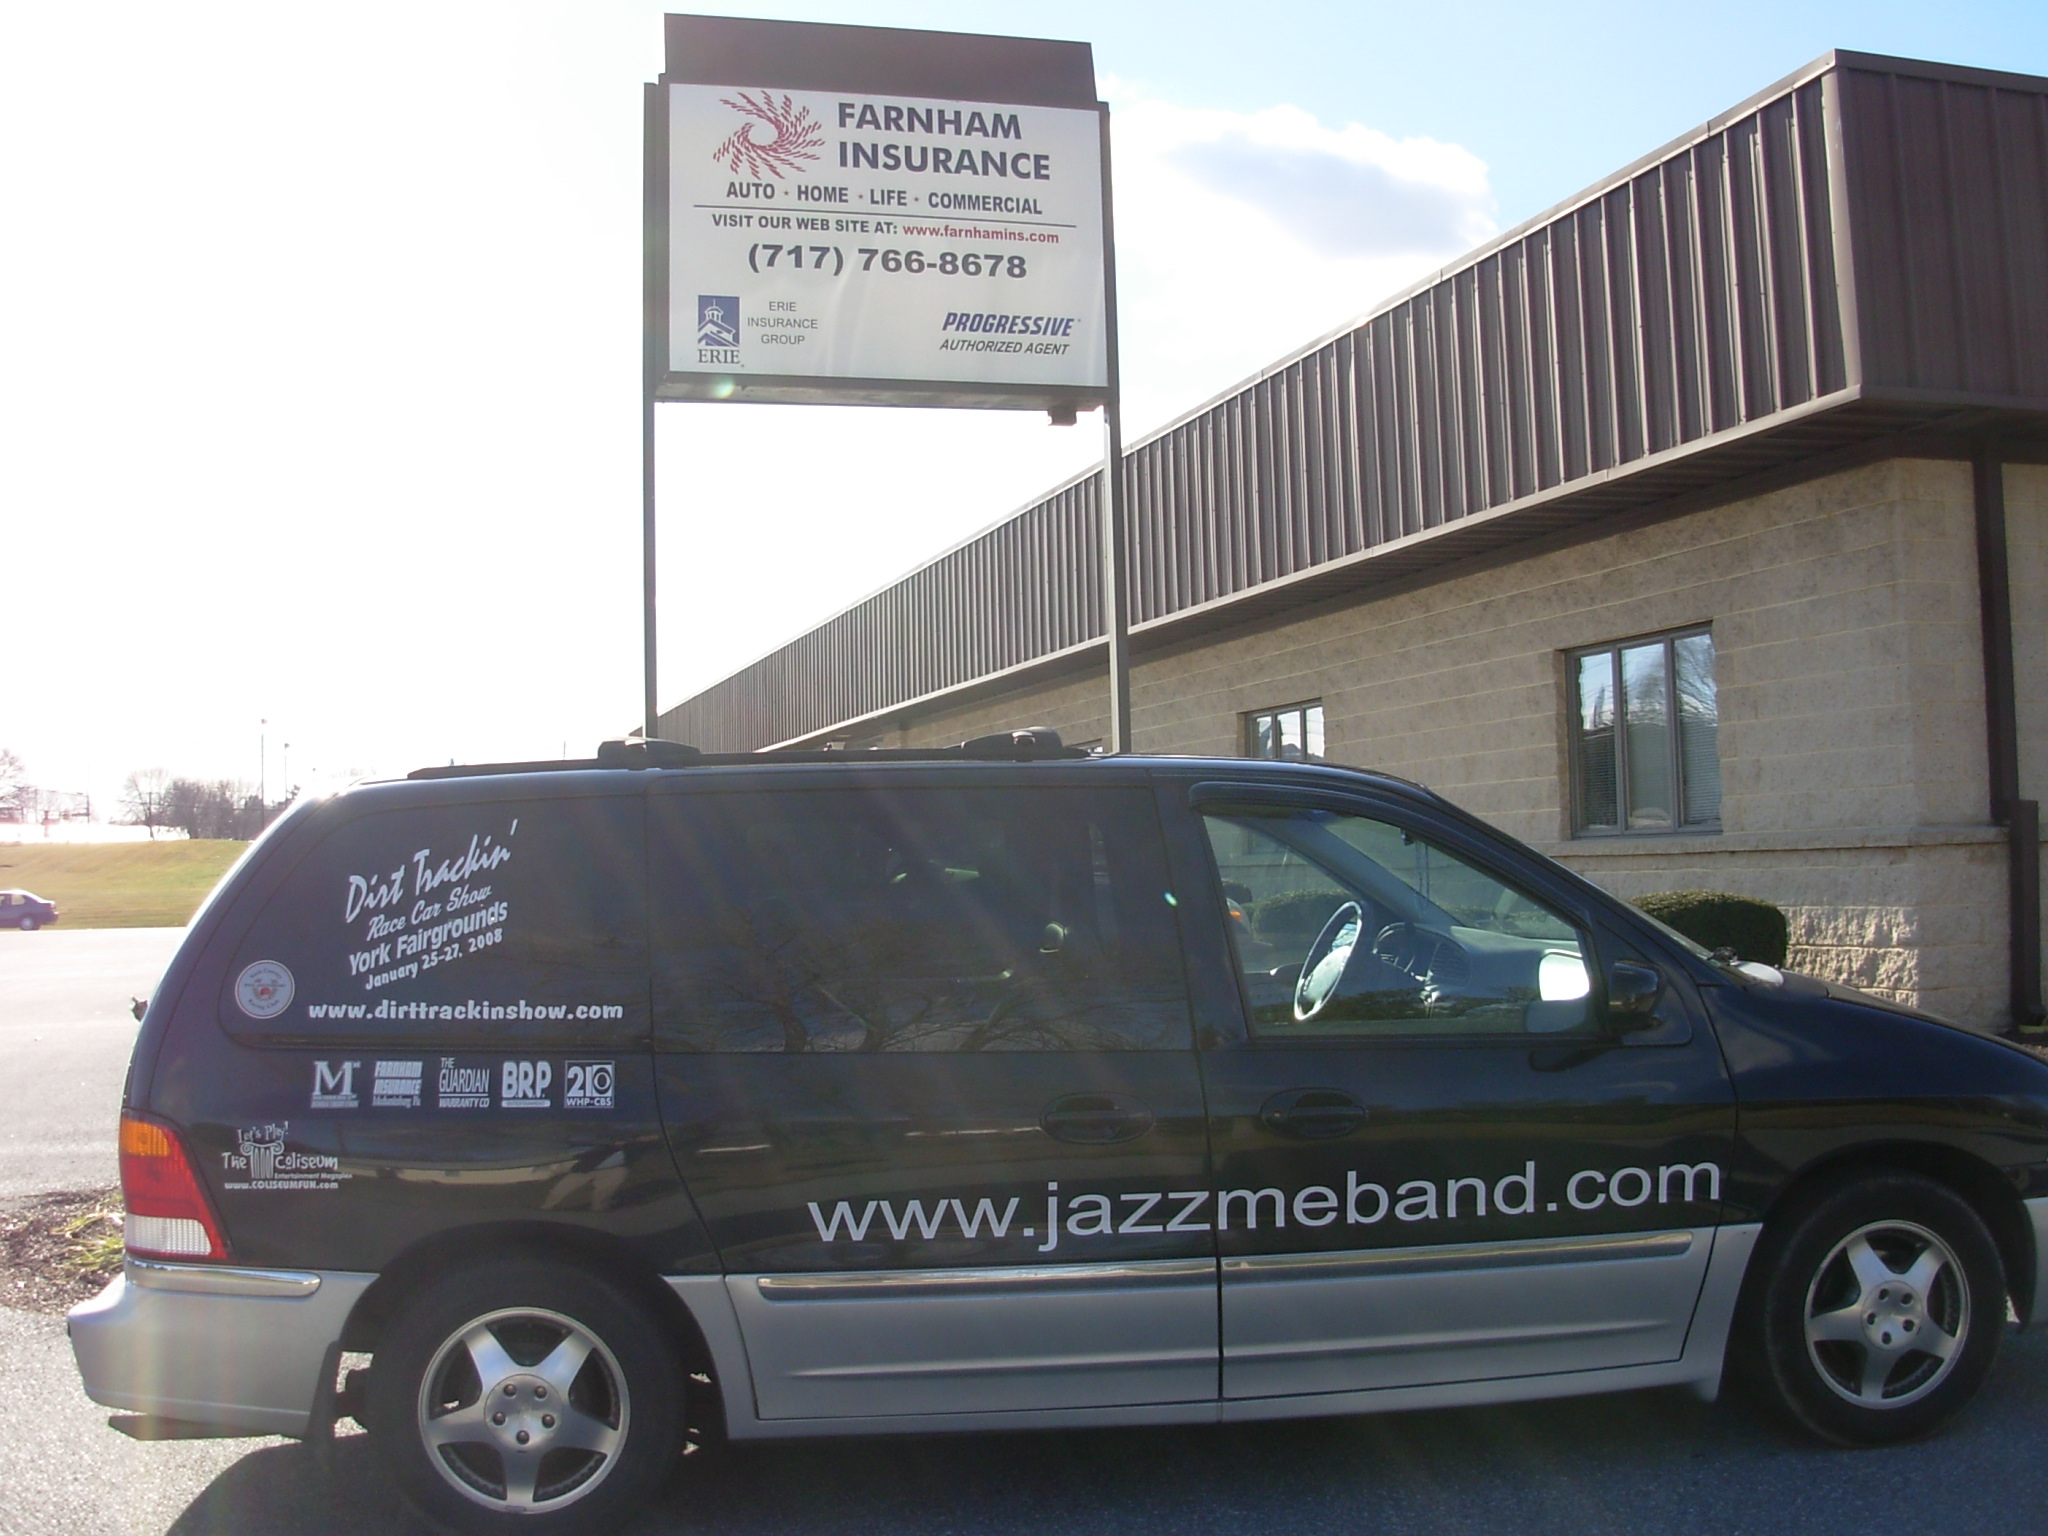 Farnham Insurance of Mechanicsburg...
A sponsor of the band again in 2008.
